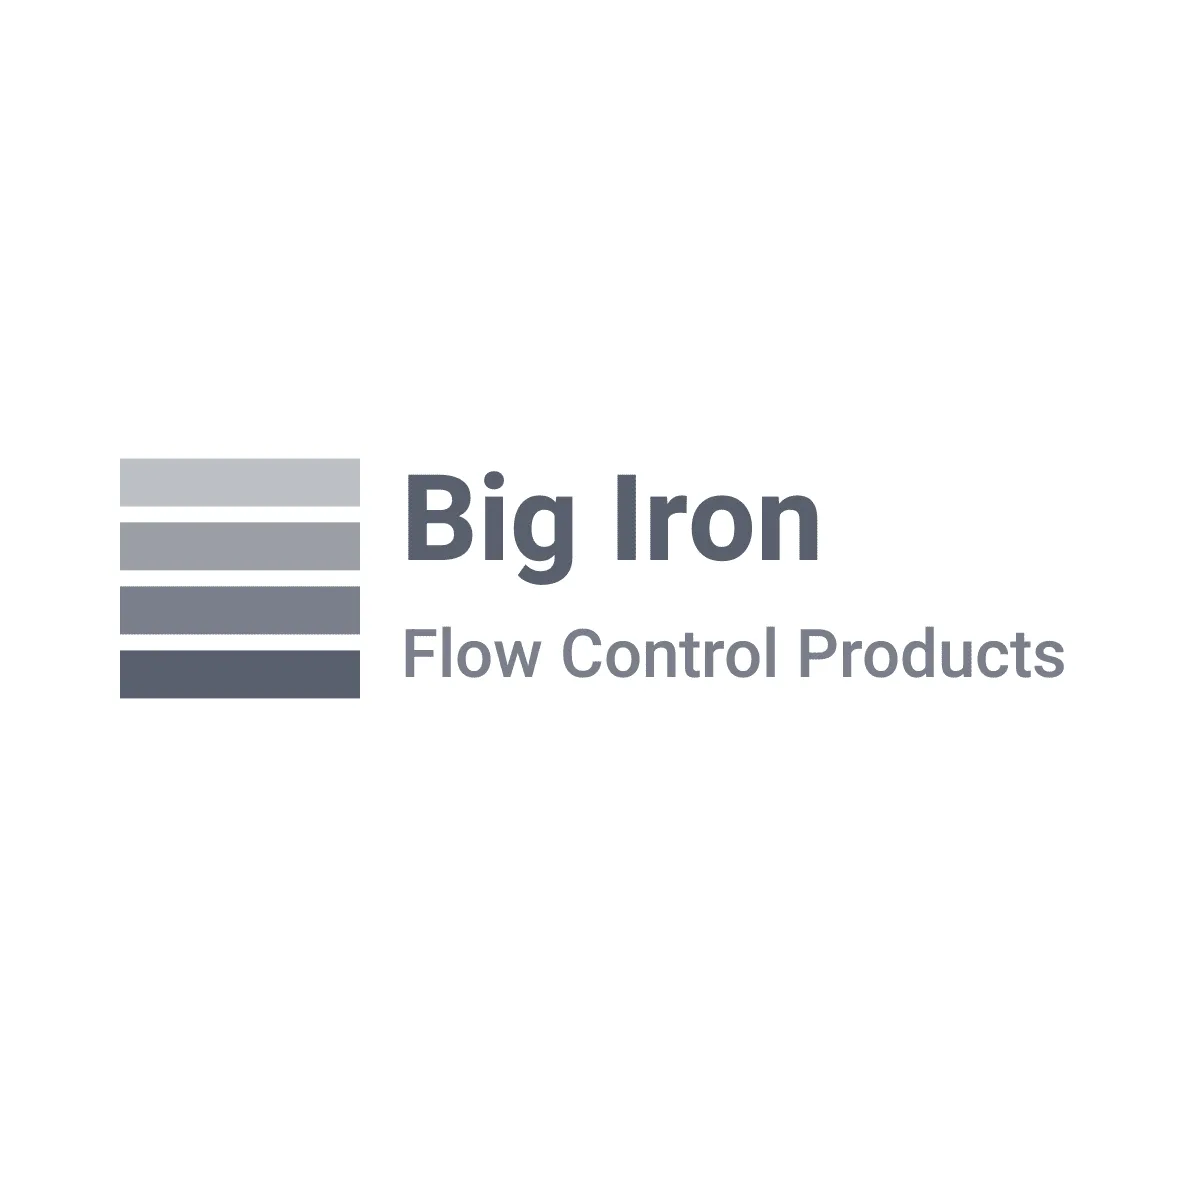 Big Iron Flow